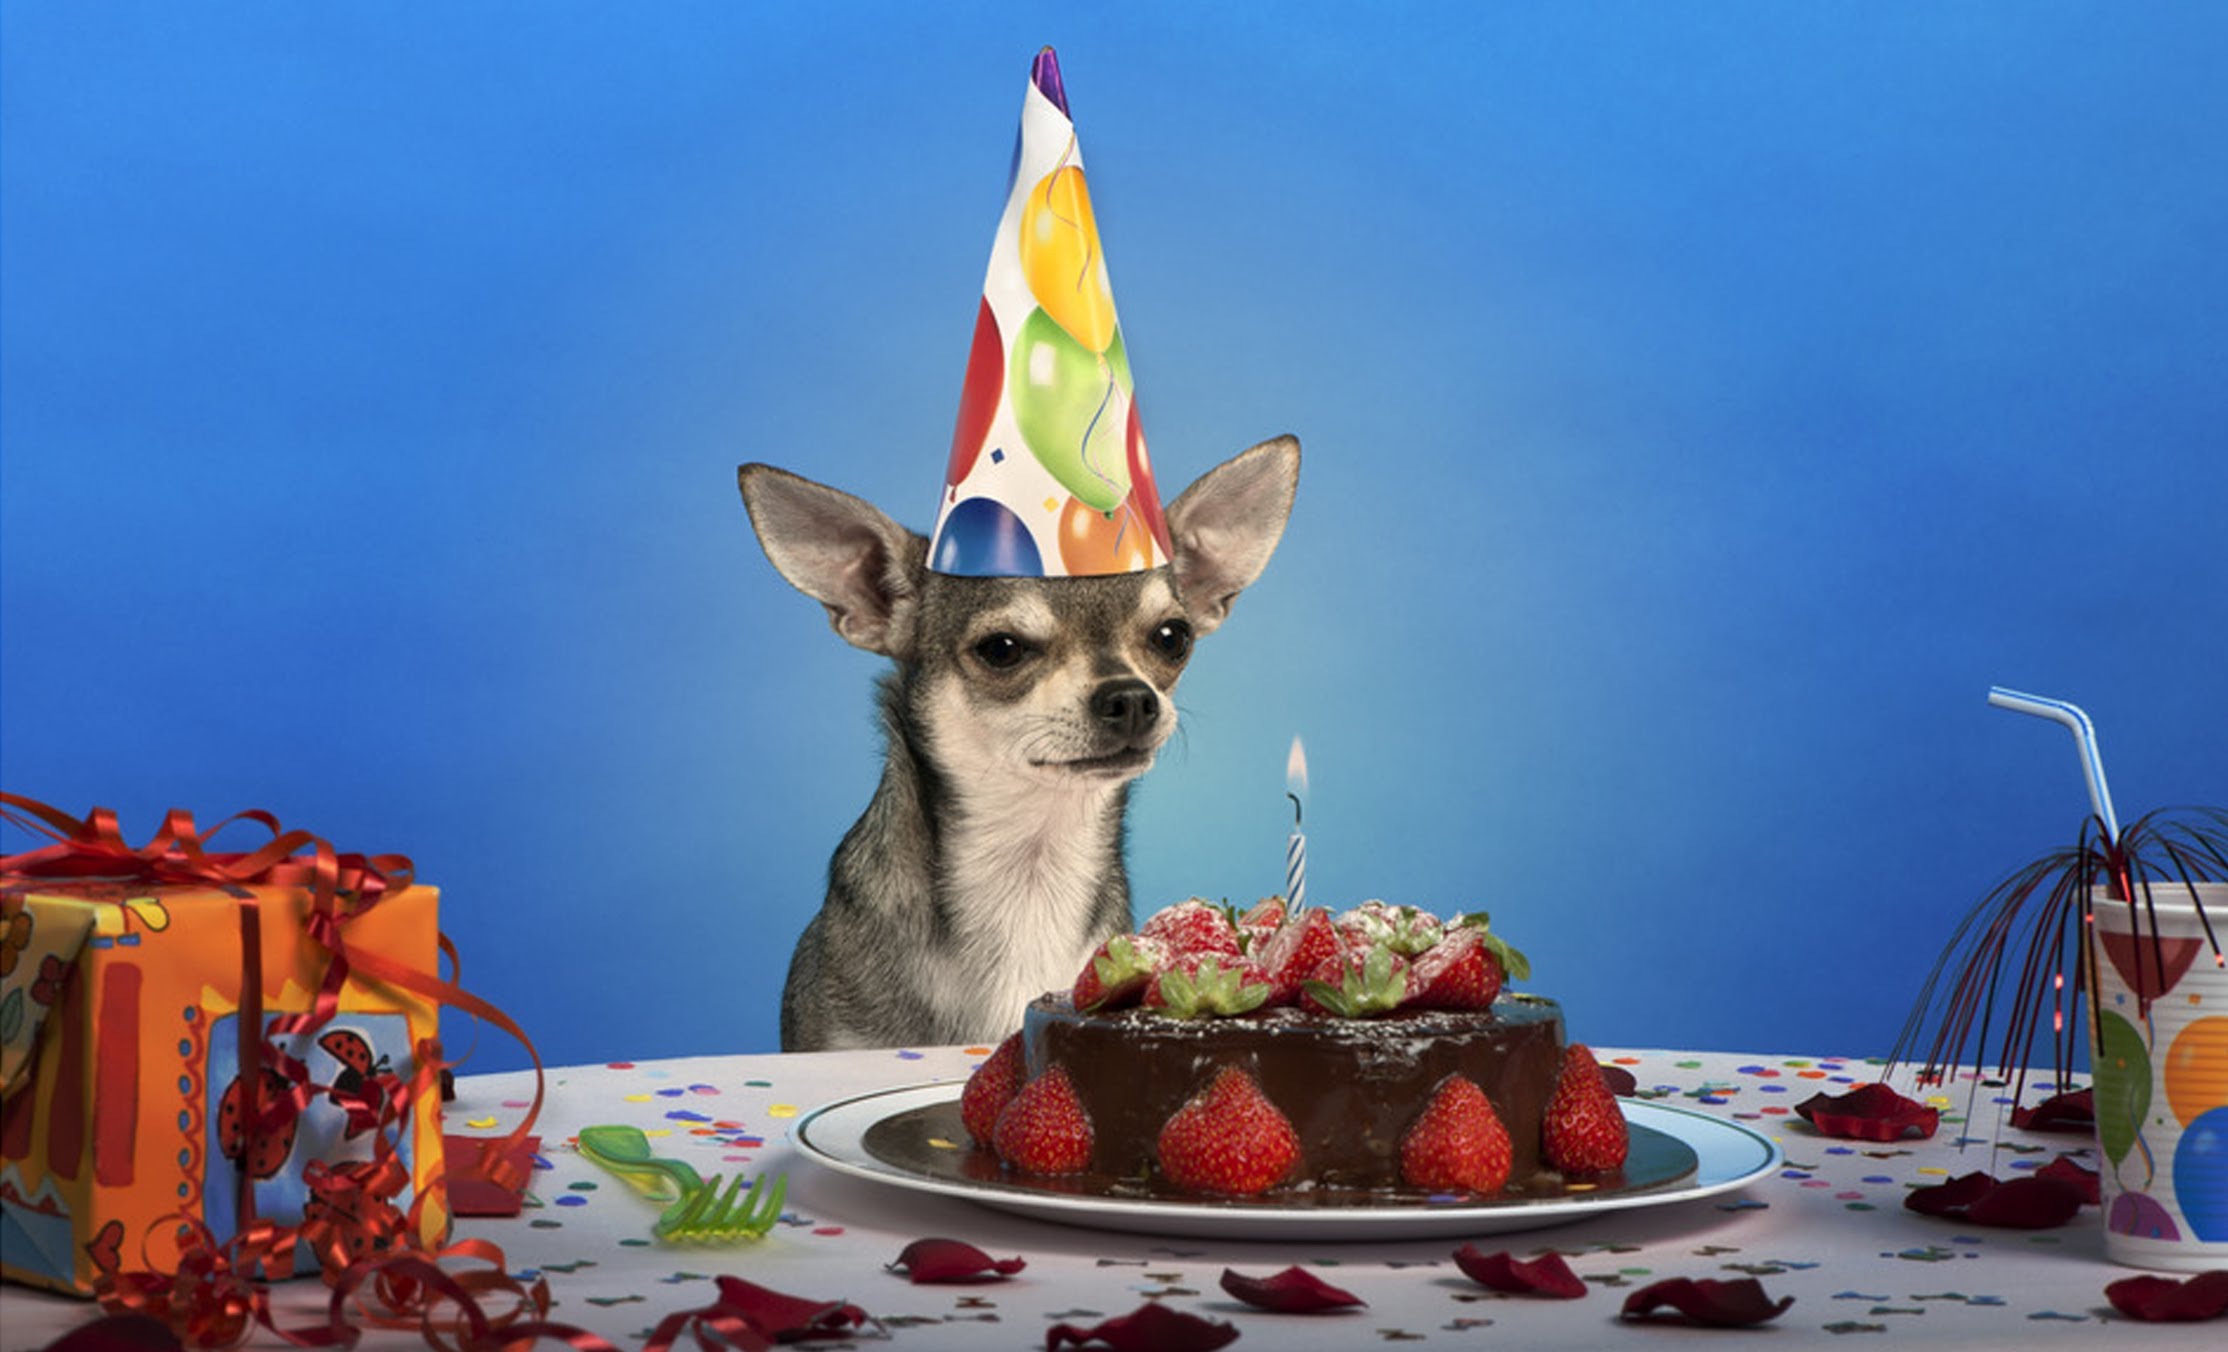 How to make a dog friendly birthday cake